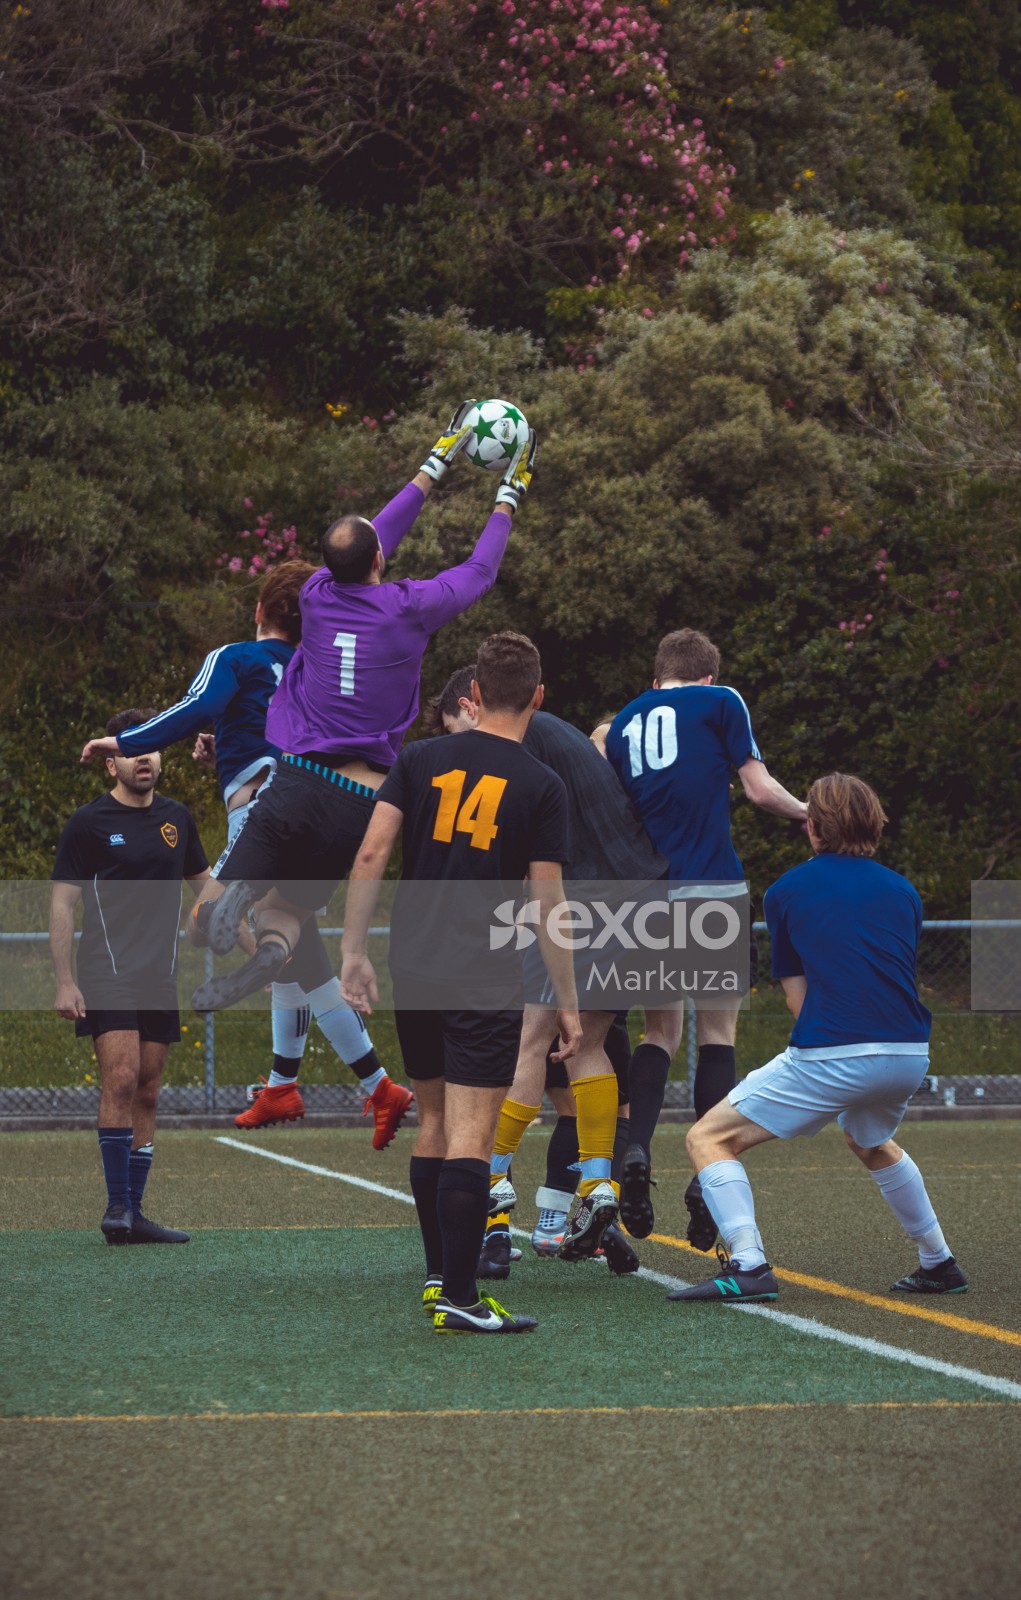 Bald goalkeeper in purple shirt catches ball midair - Sports Zone sunday league